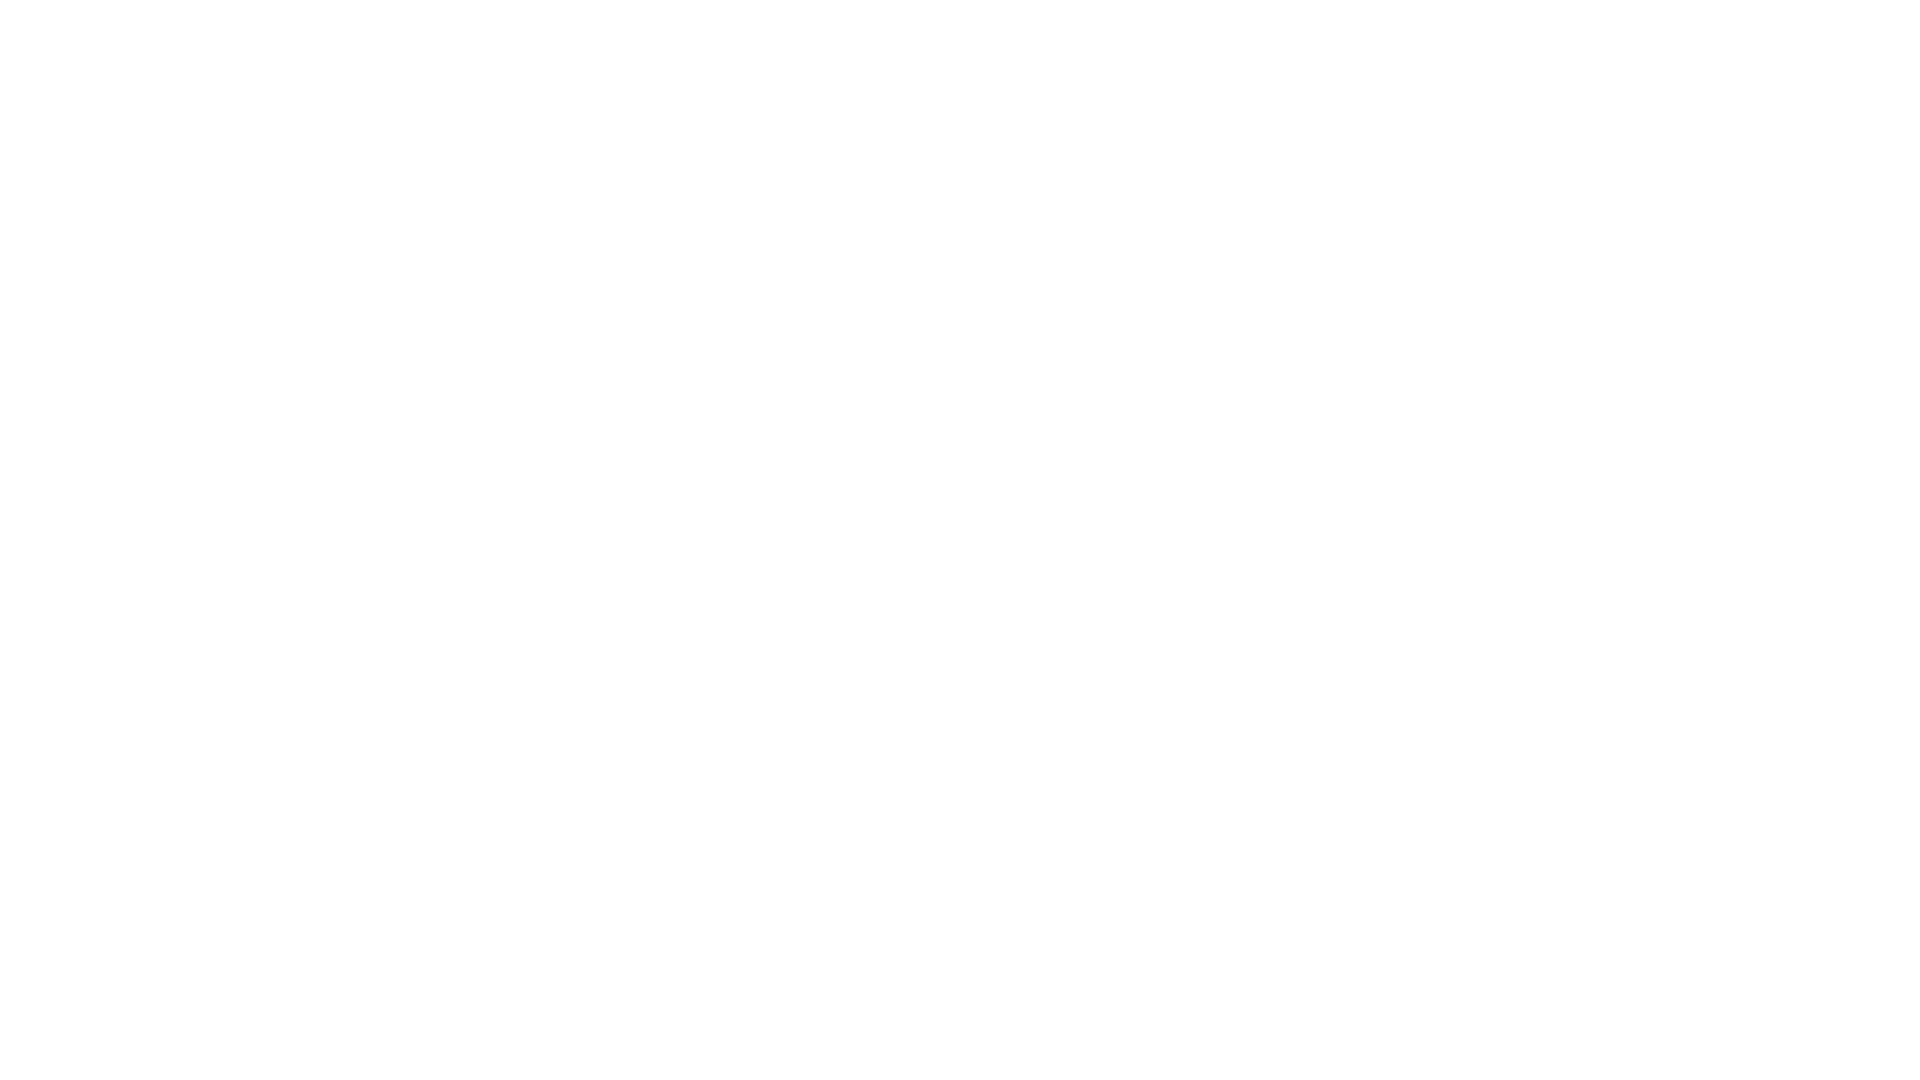 42è festival